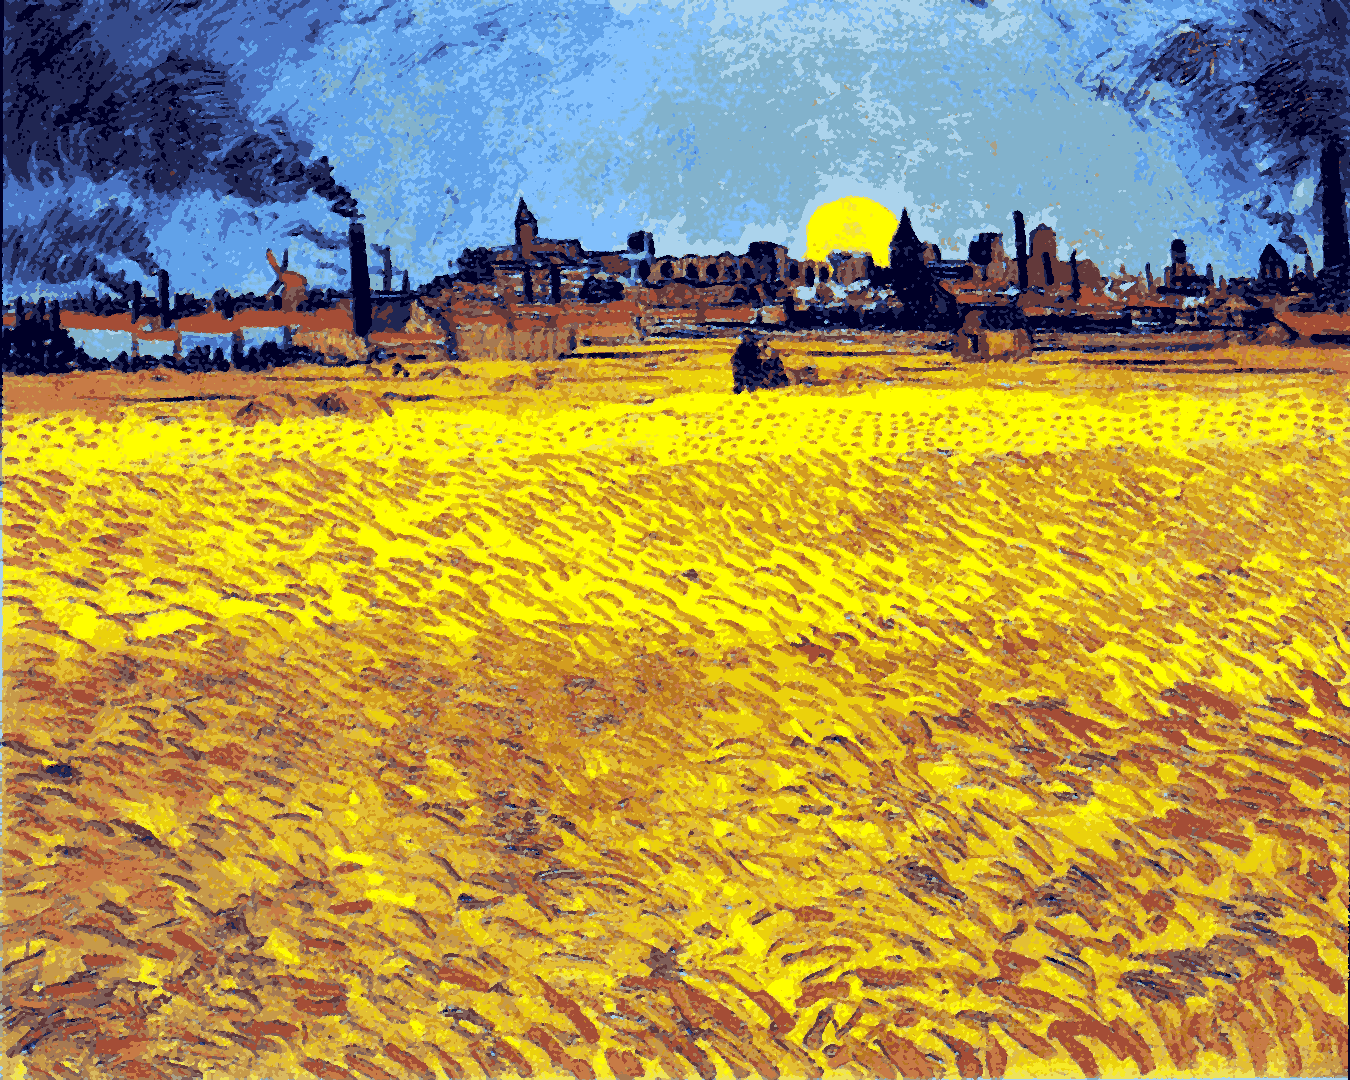 Vincent Van Gogh PD - (136) - Summer evening in Arles - Van-Go Paint-By-Number Kit